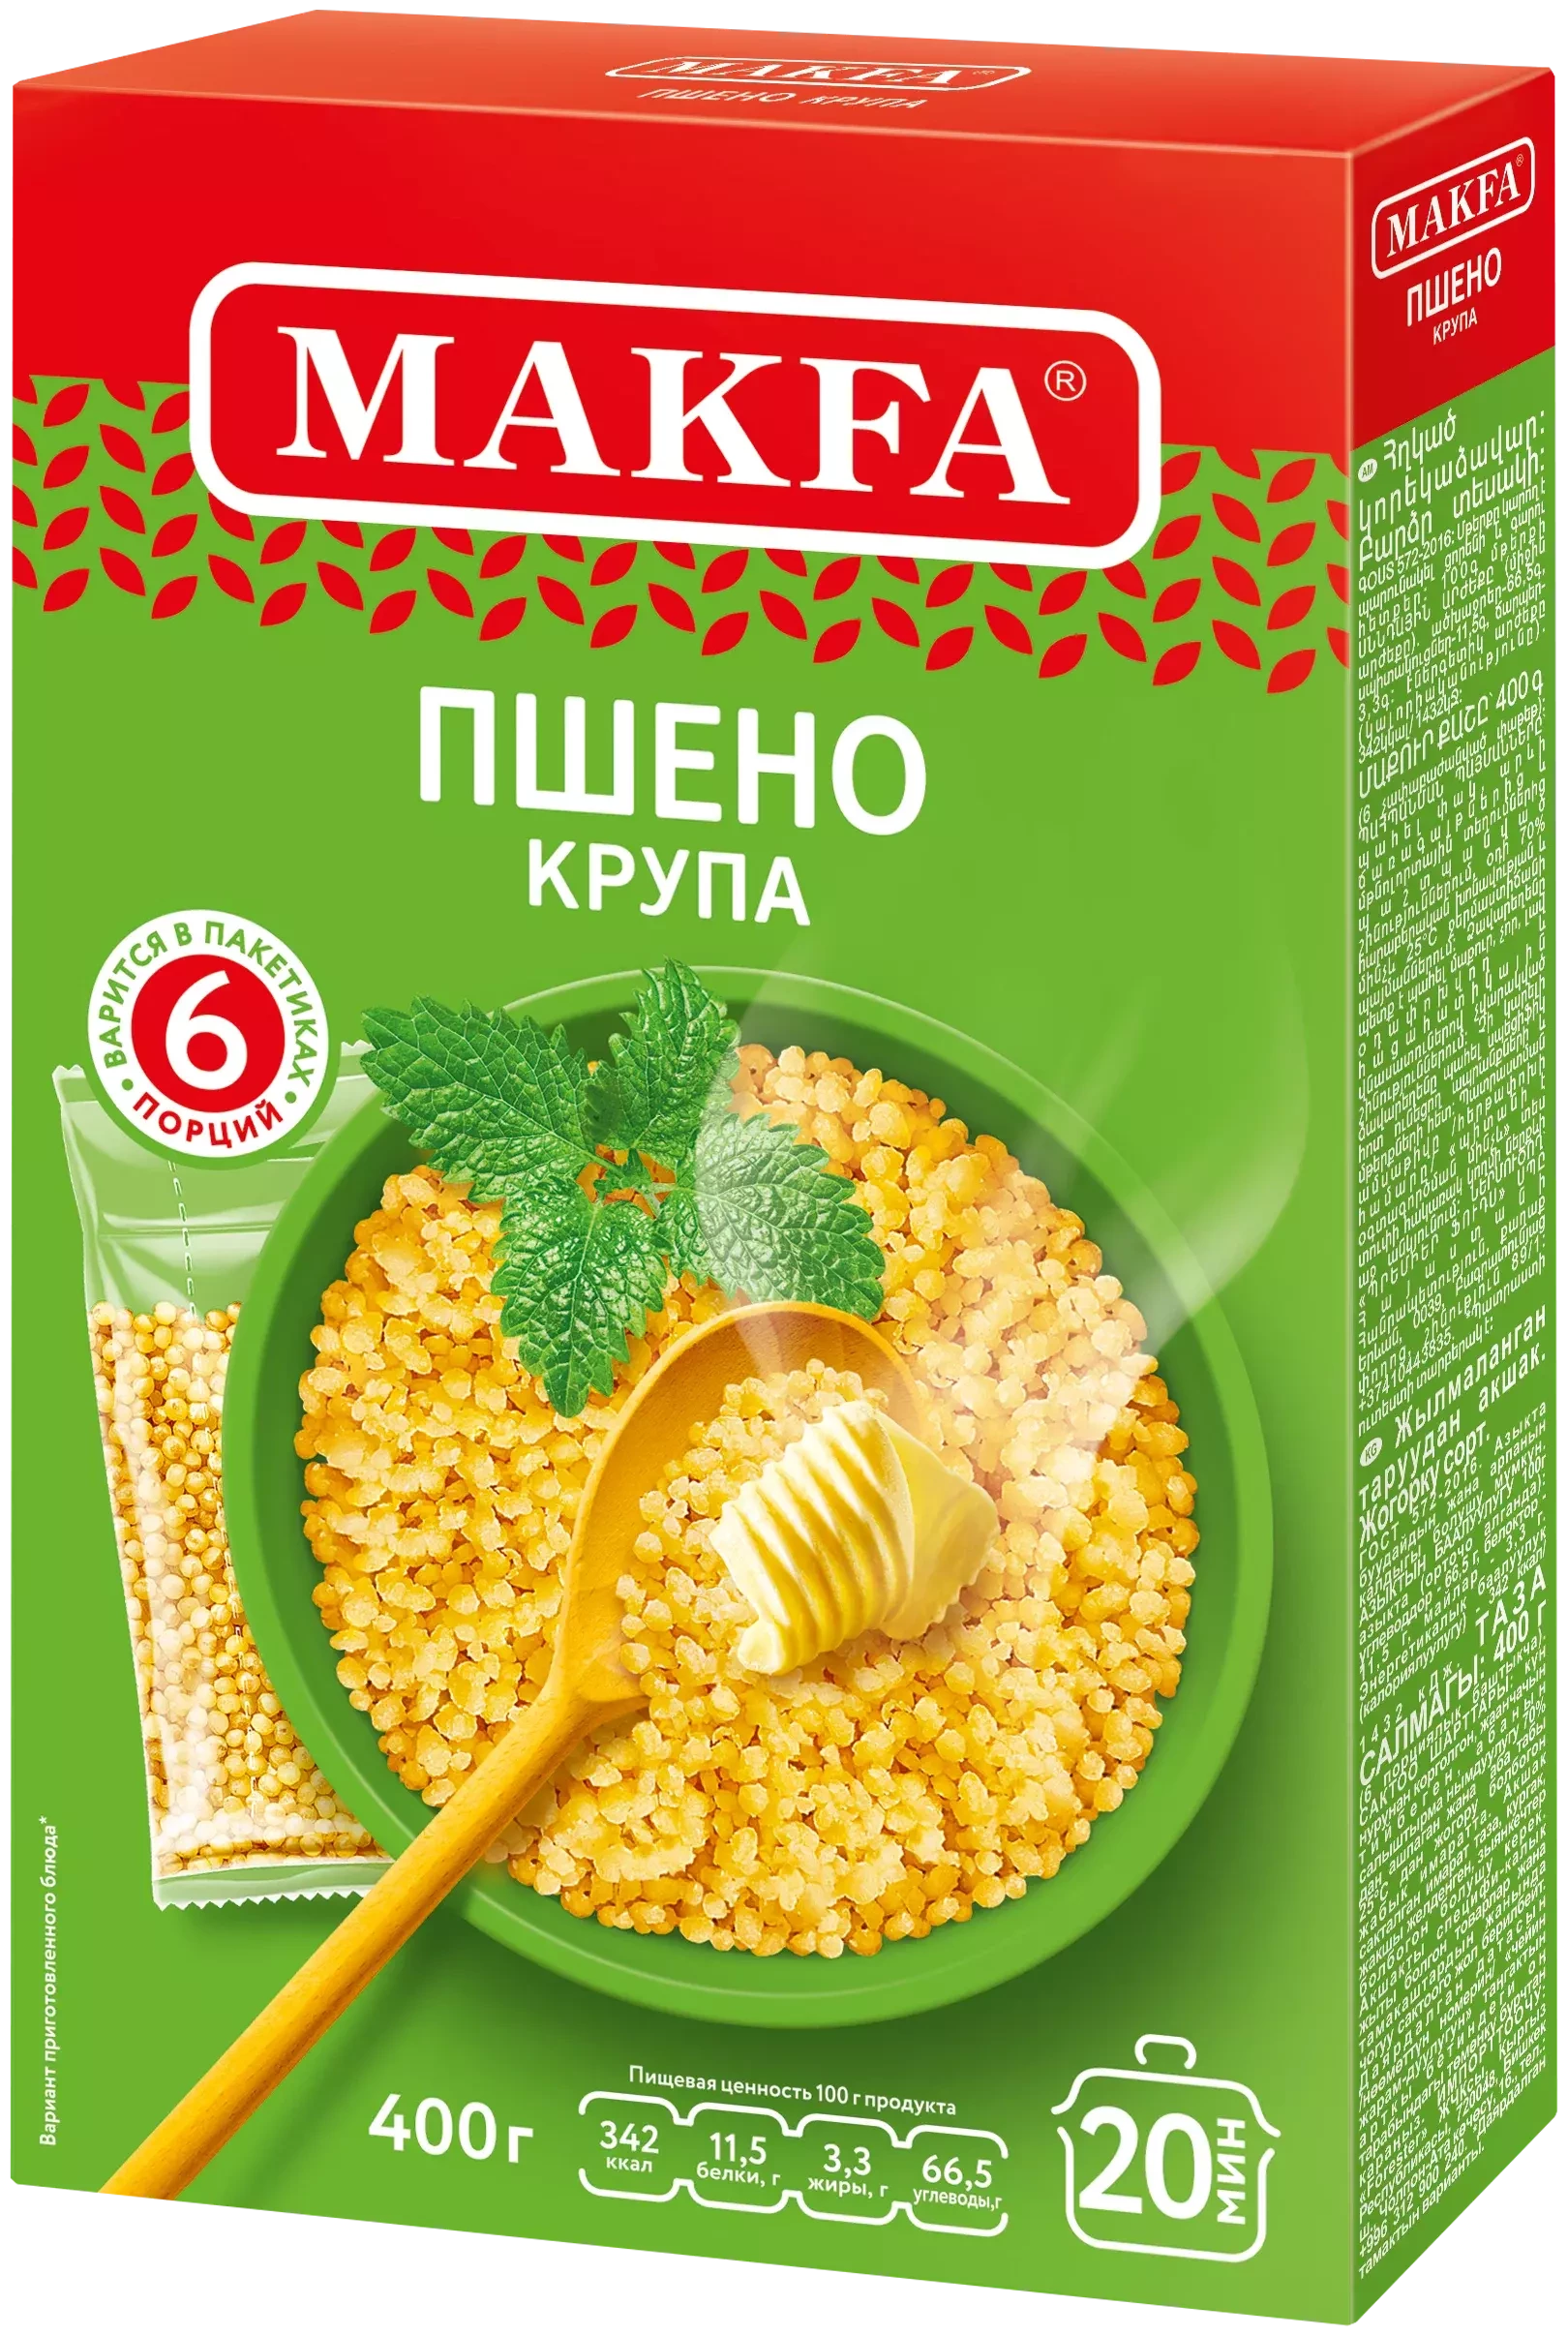 MAKFA, Пшено в варочных пакетах, 400 гр